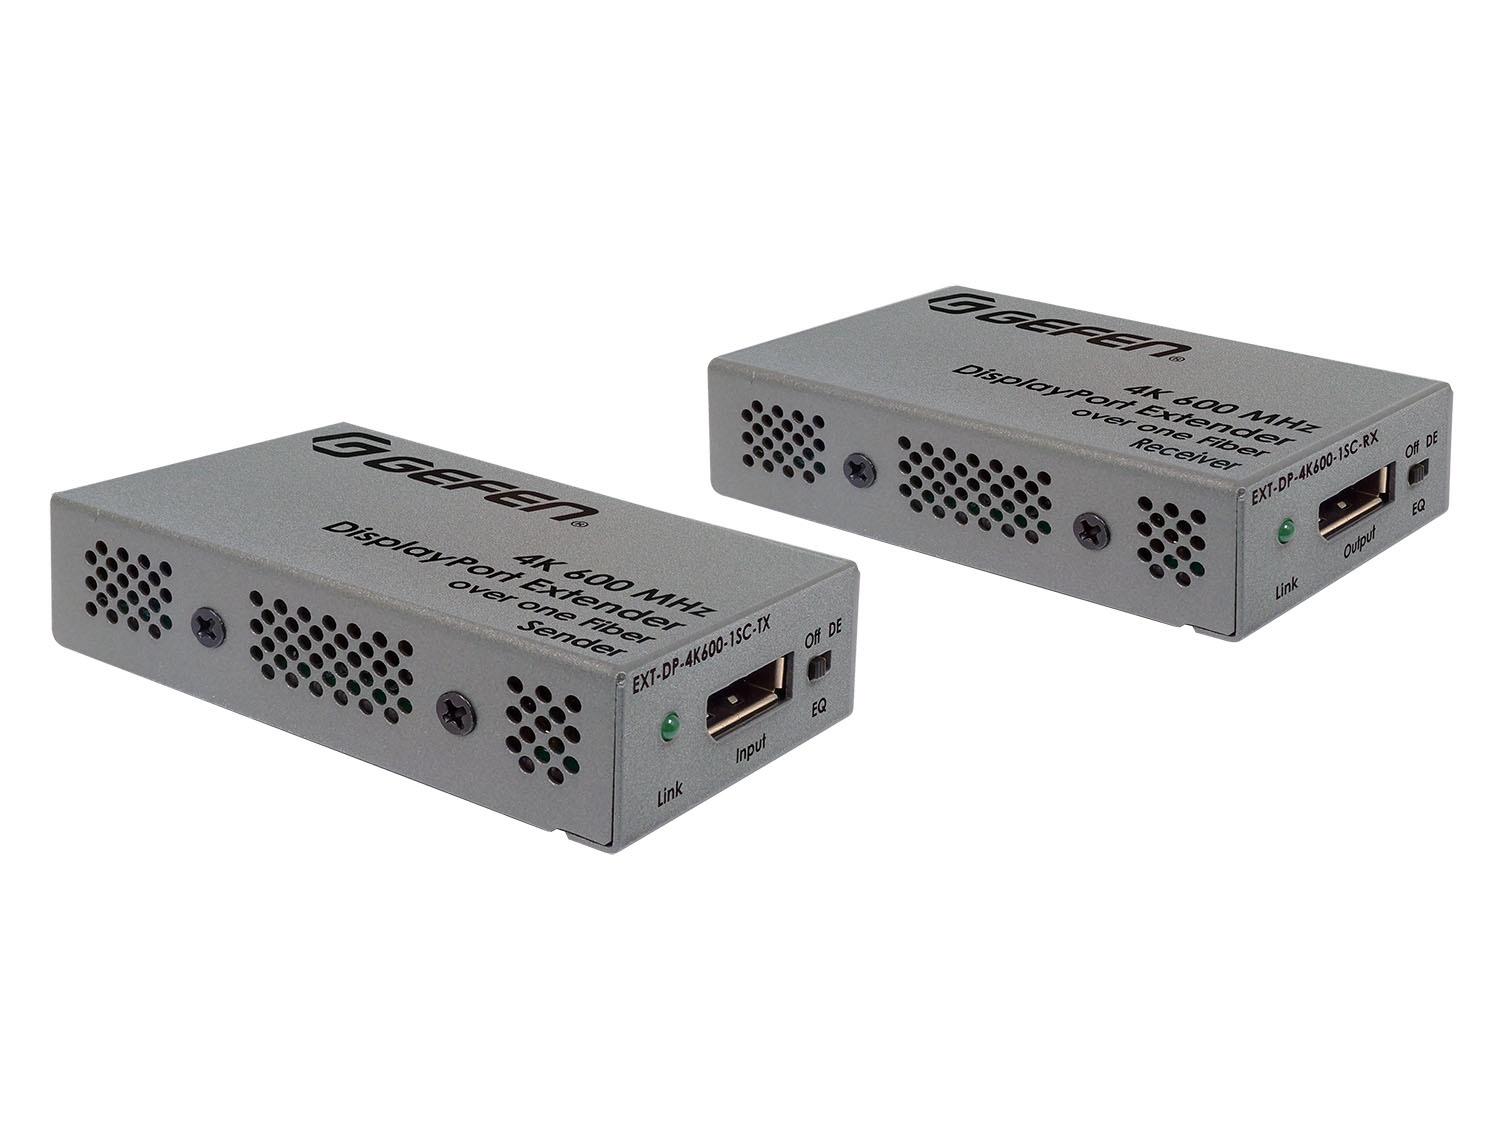 EXT-DP-4K600-1SC 4K/600MHz DisplayPort Extender (Transmitter/Receiver) Kit over 1 SC-Terminated Fiber Optic Cable by Gefen